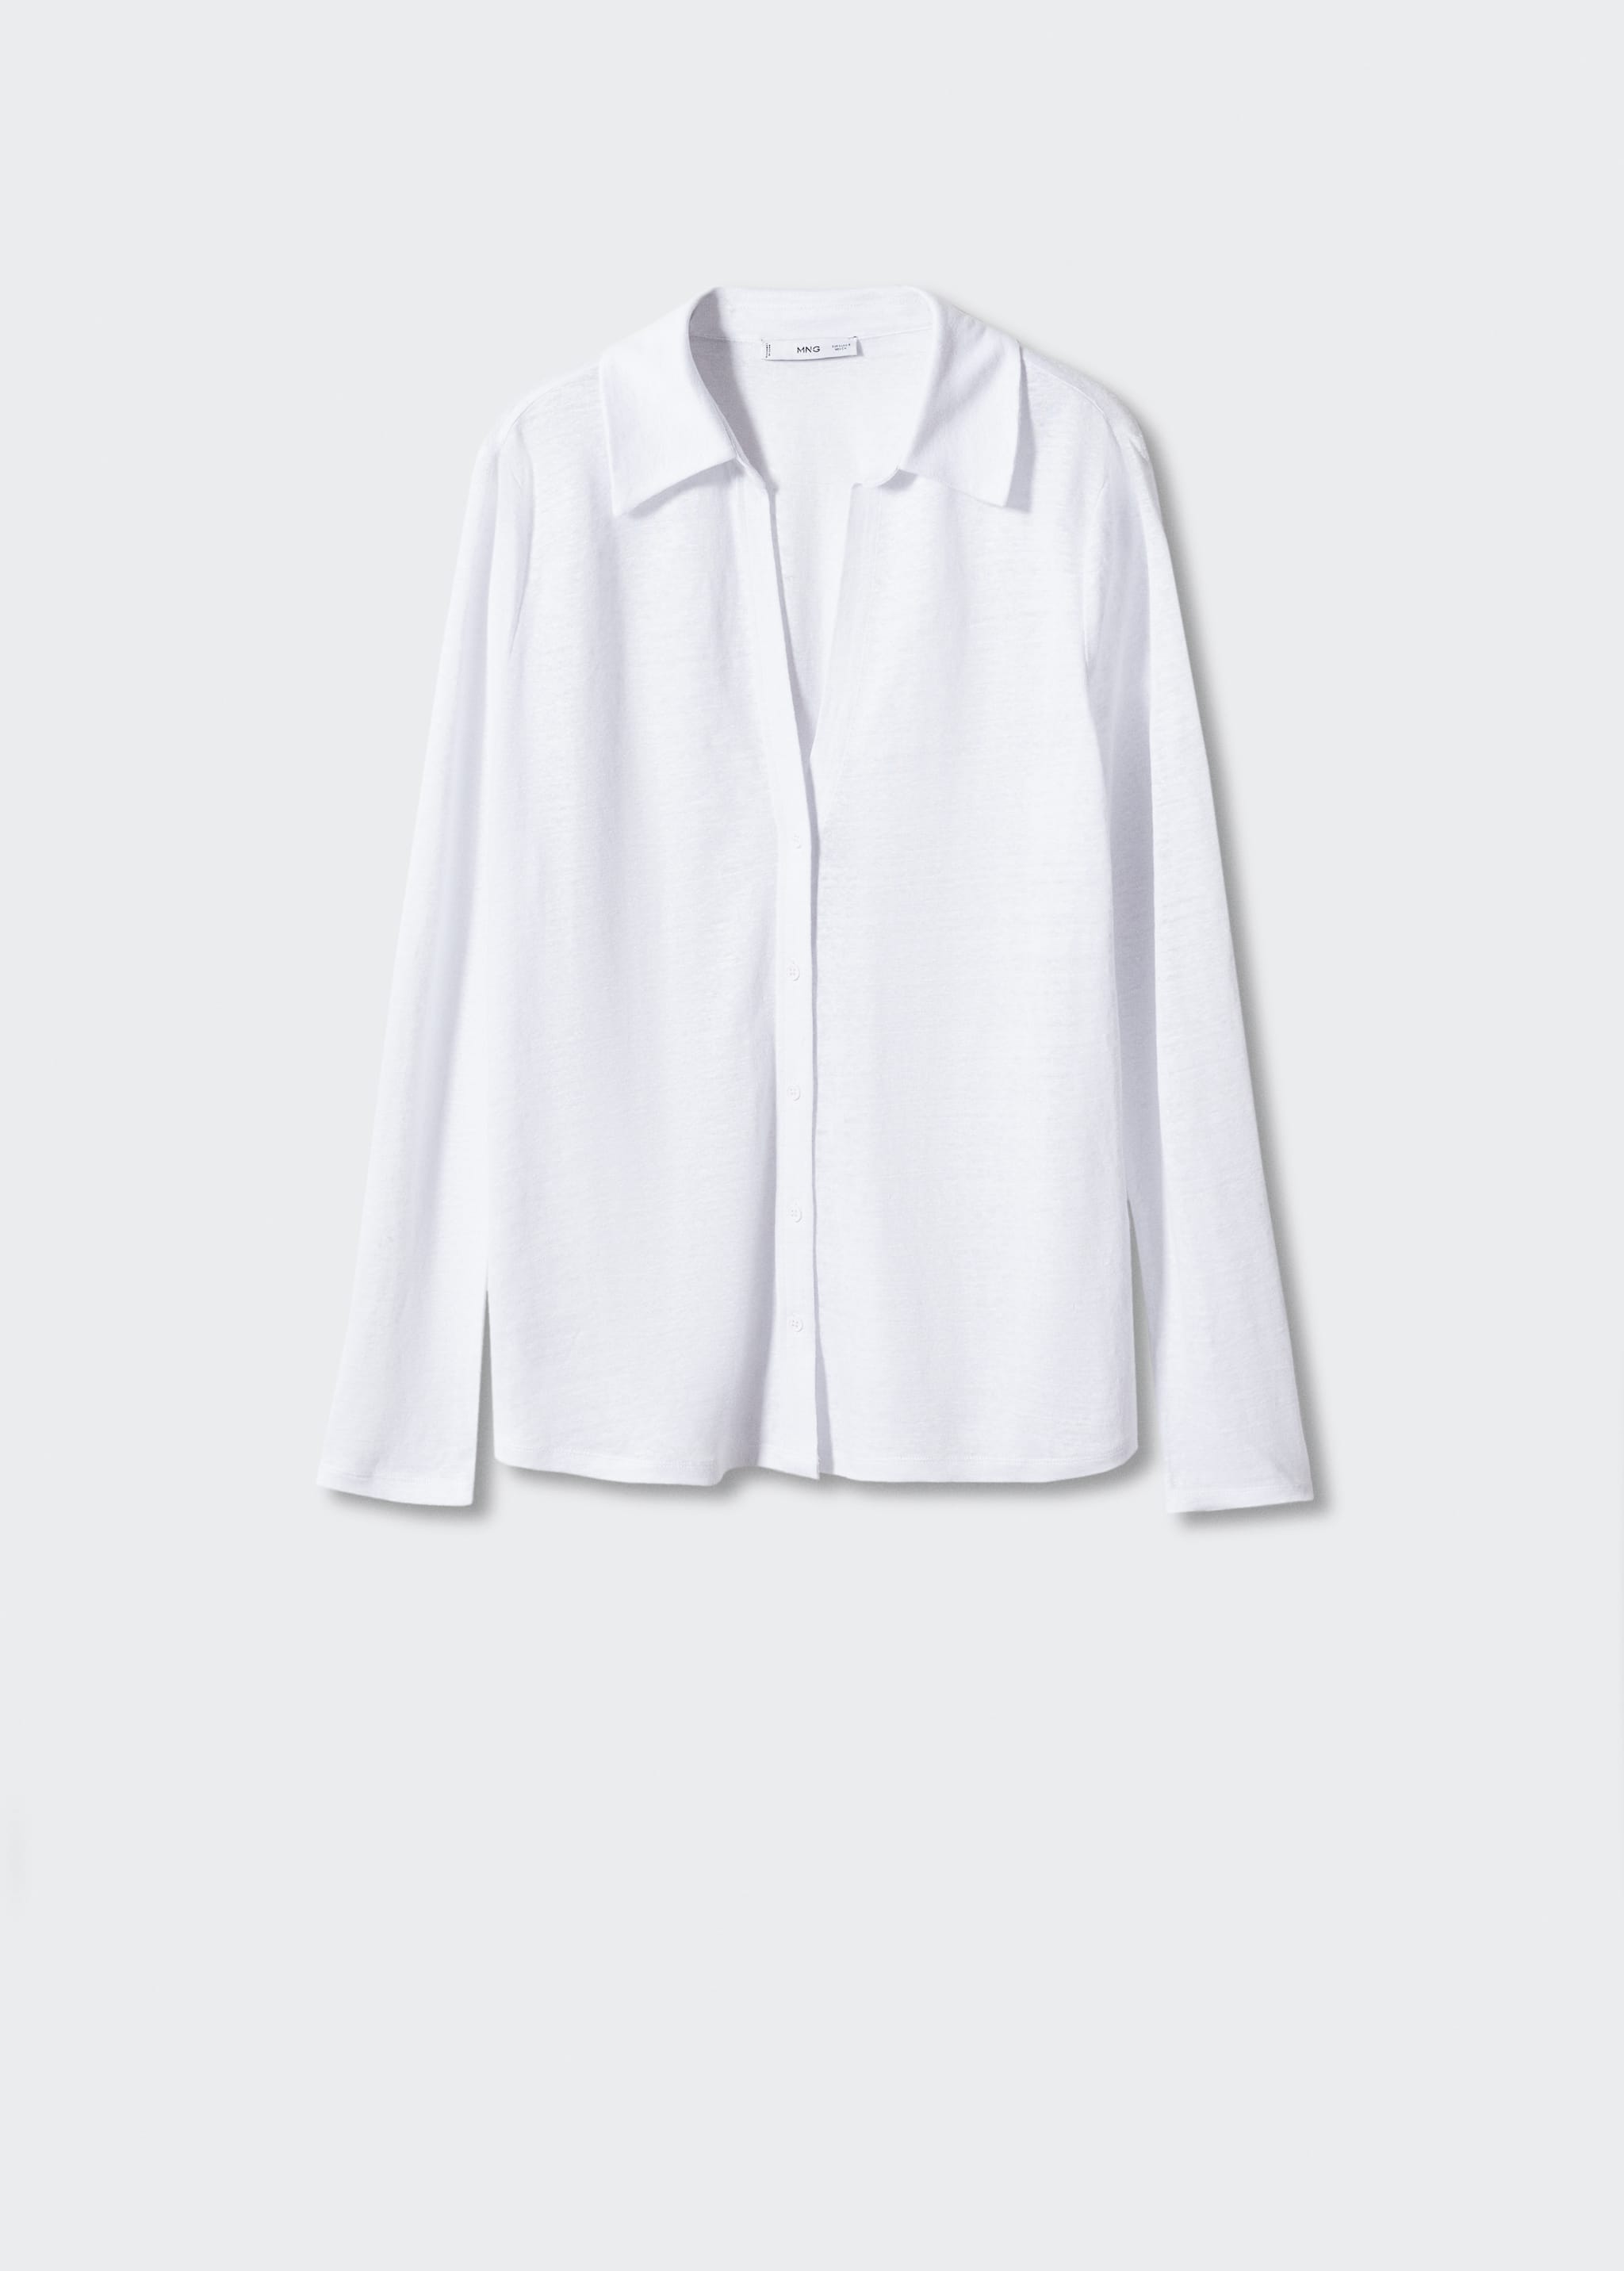 V-neck linen shirt - Article without model